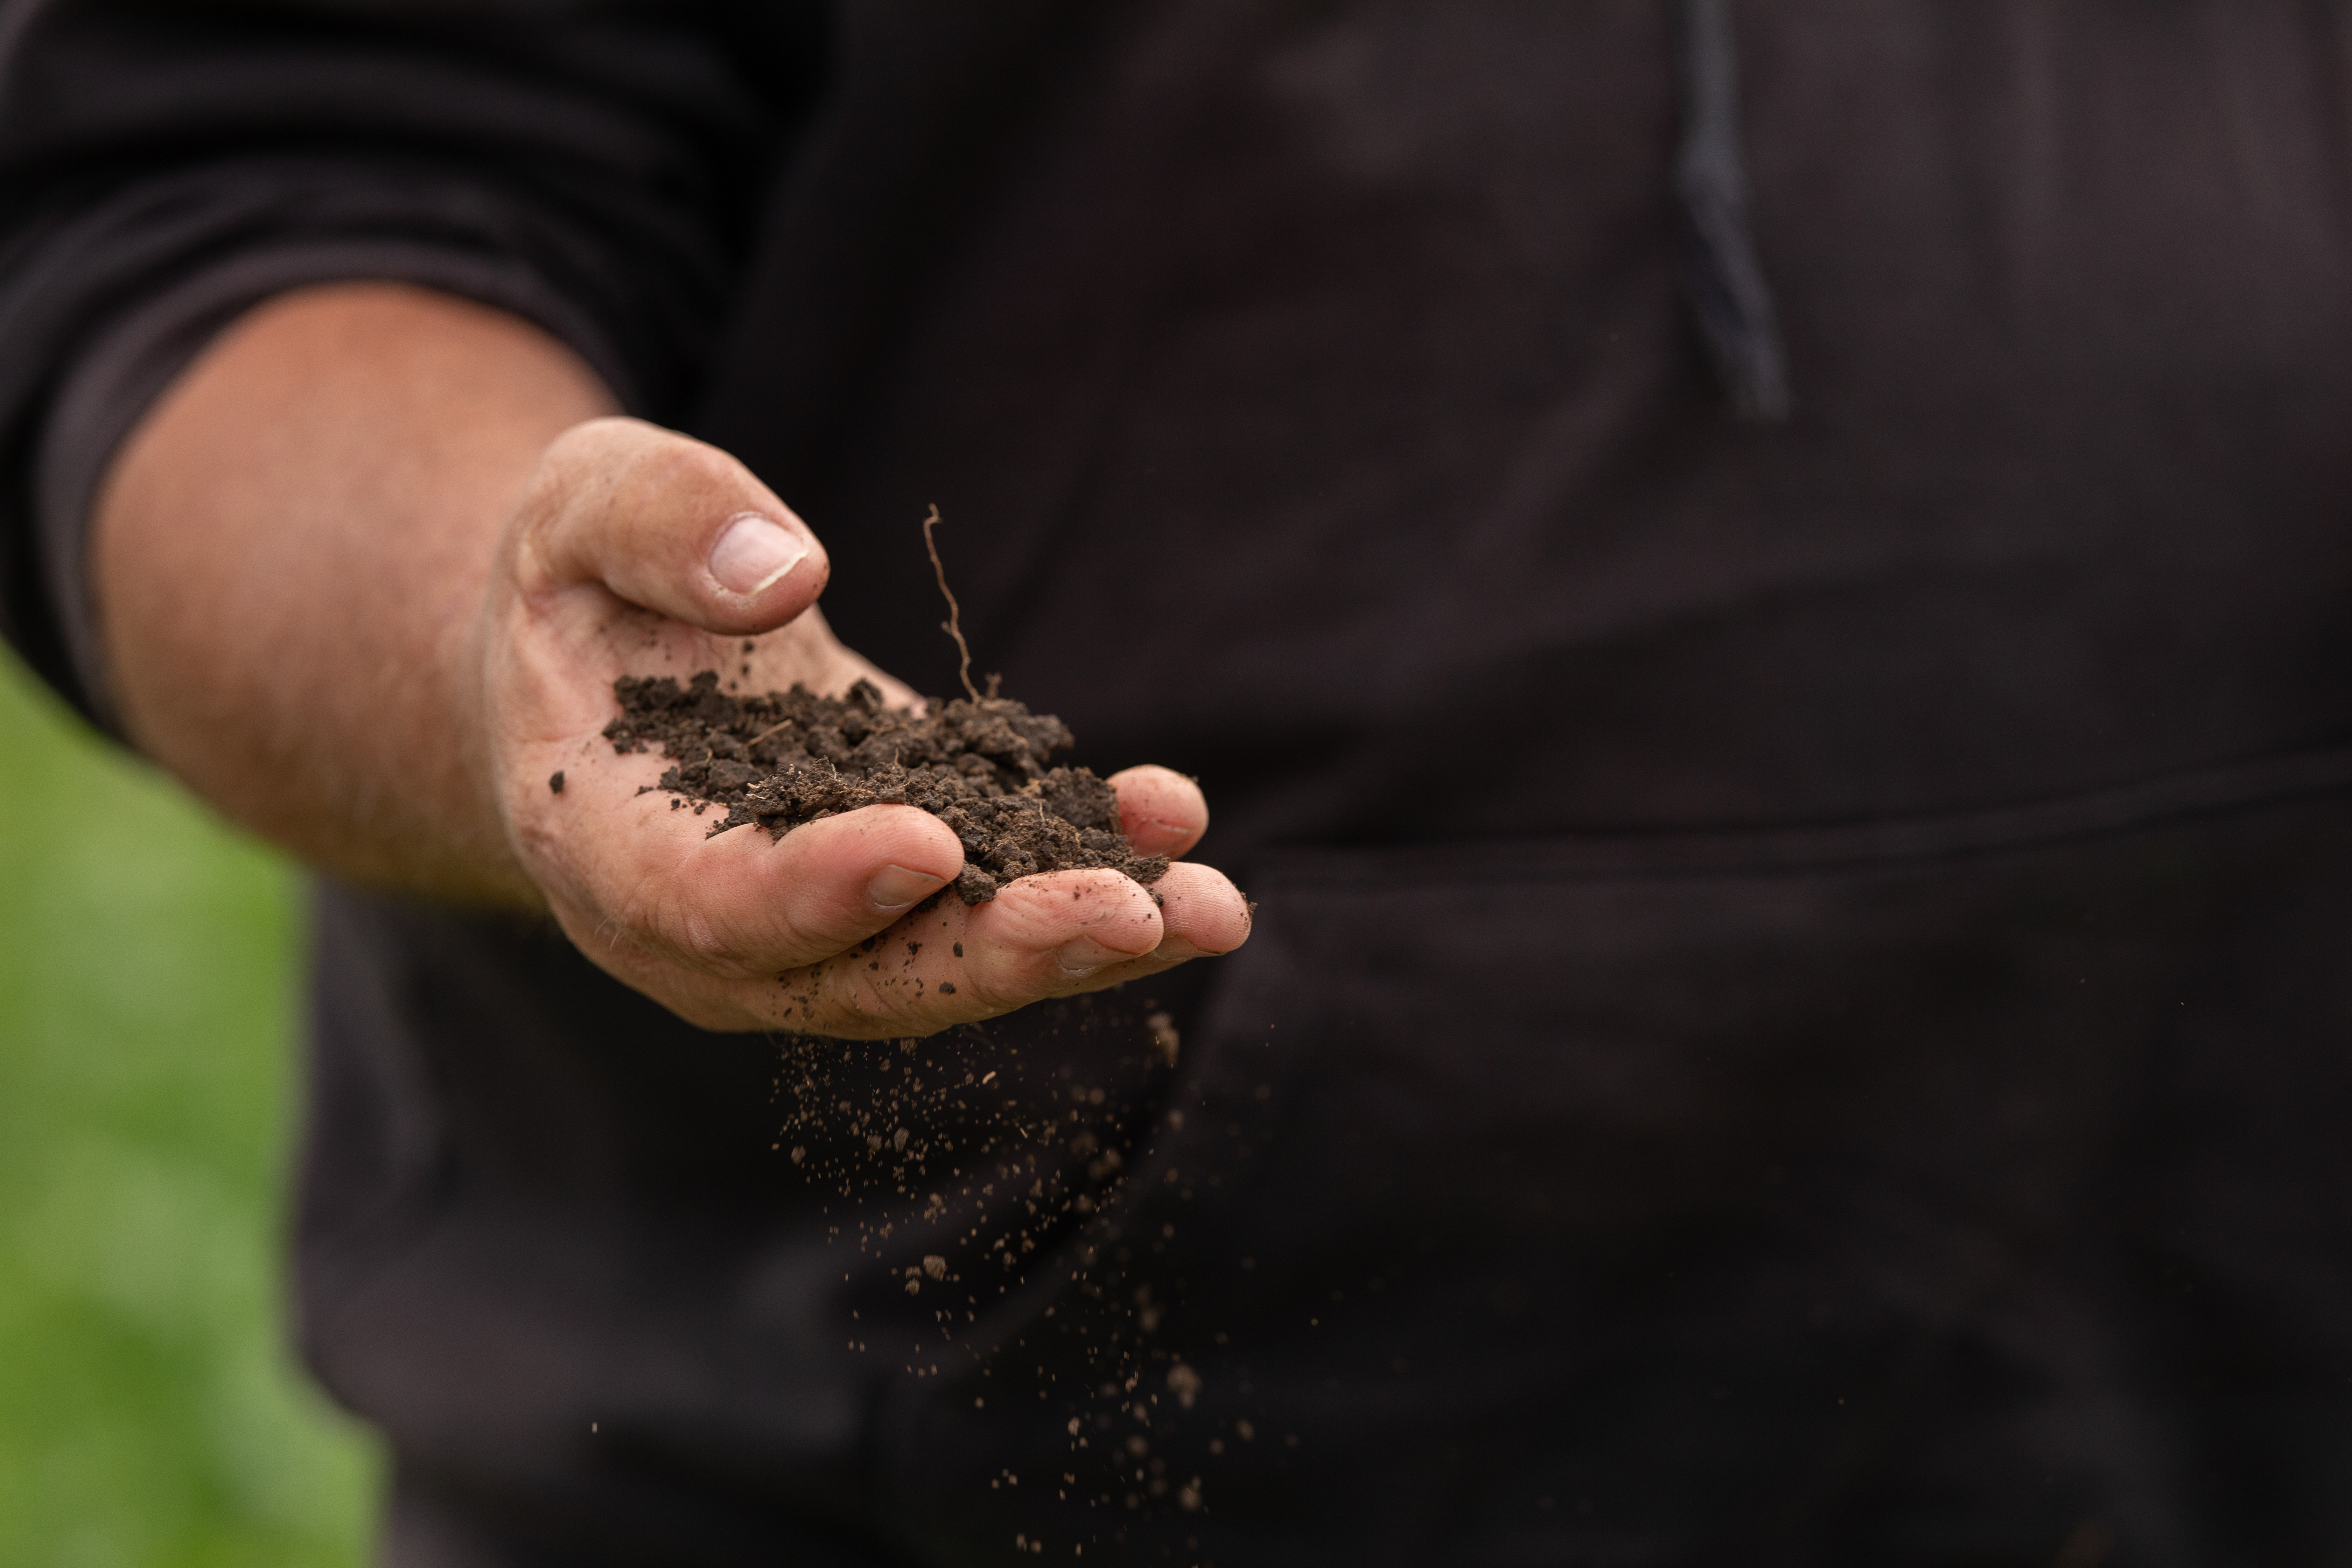 Soil in hand